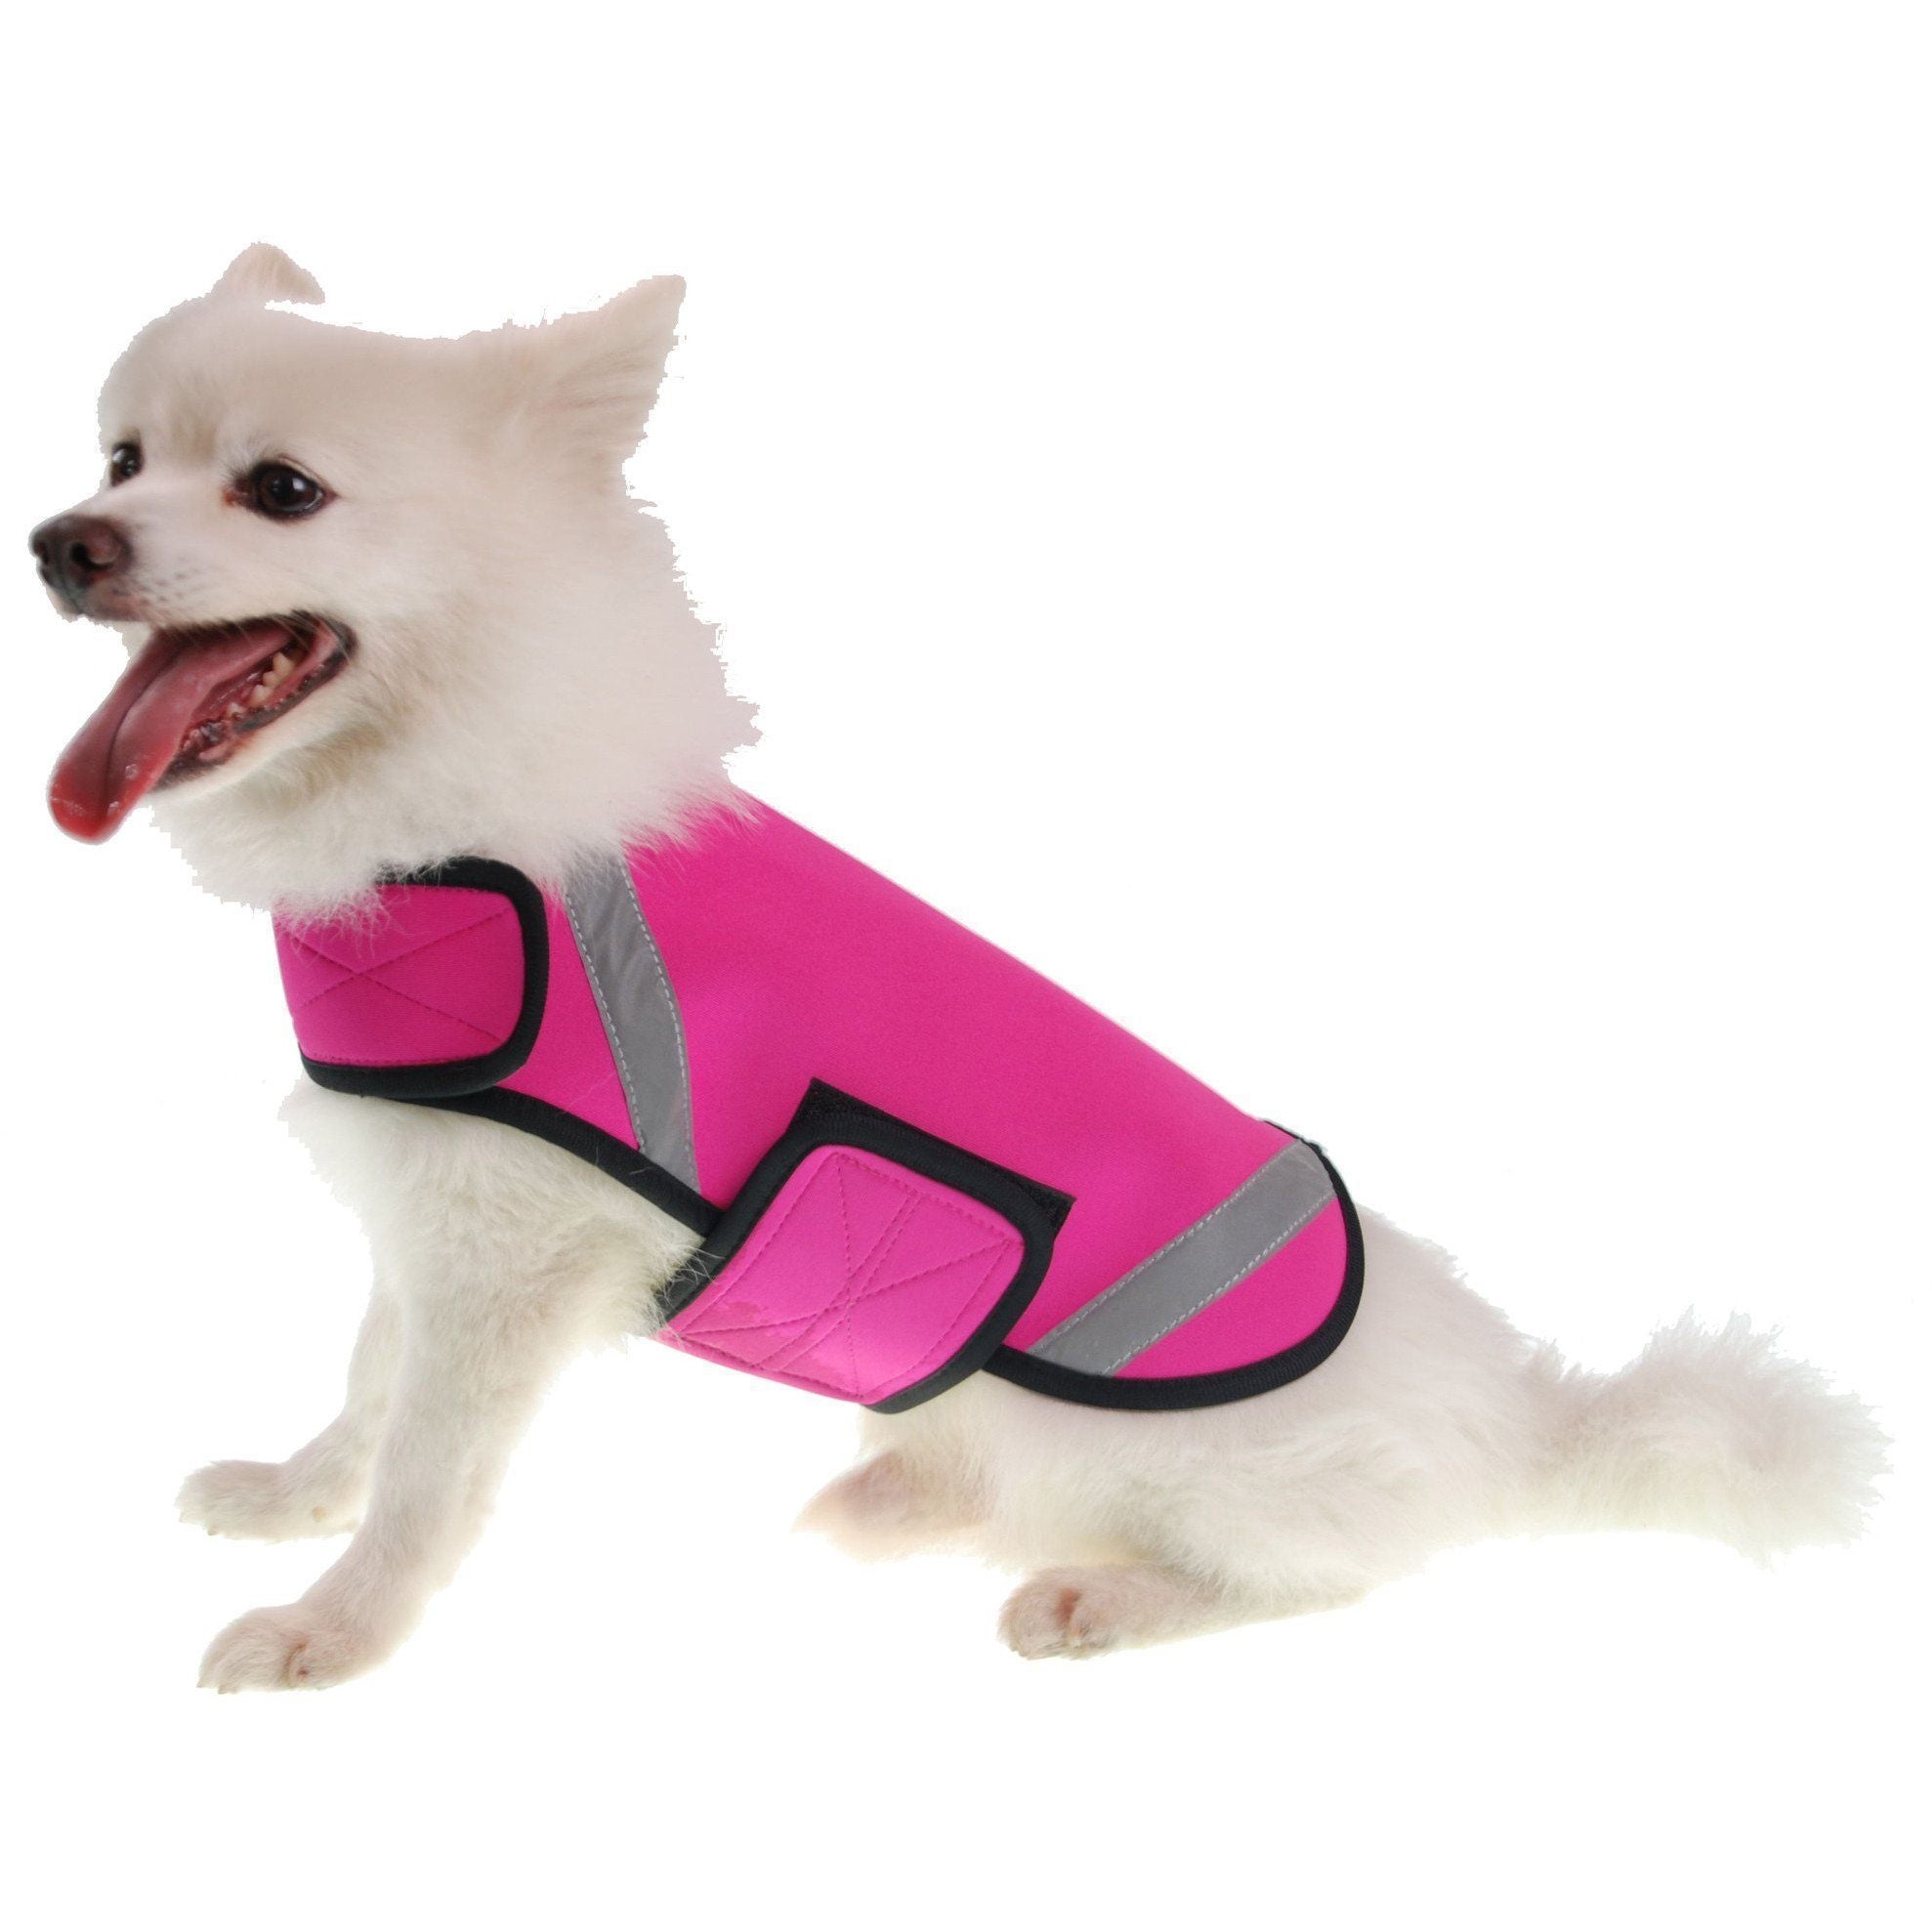 Pet Life ® 'Extreme Neoprene' Multi-Purpose Protective and Reflective Rash Guard Dog Coat X-Small Pink